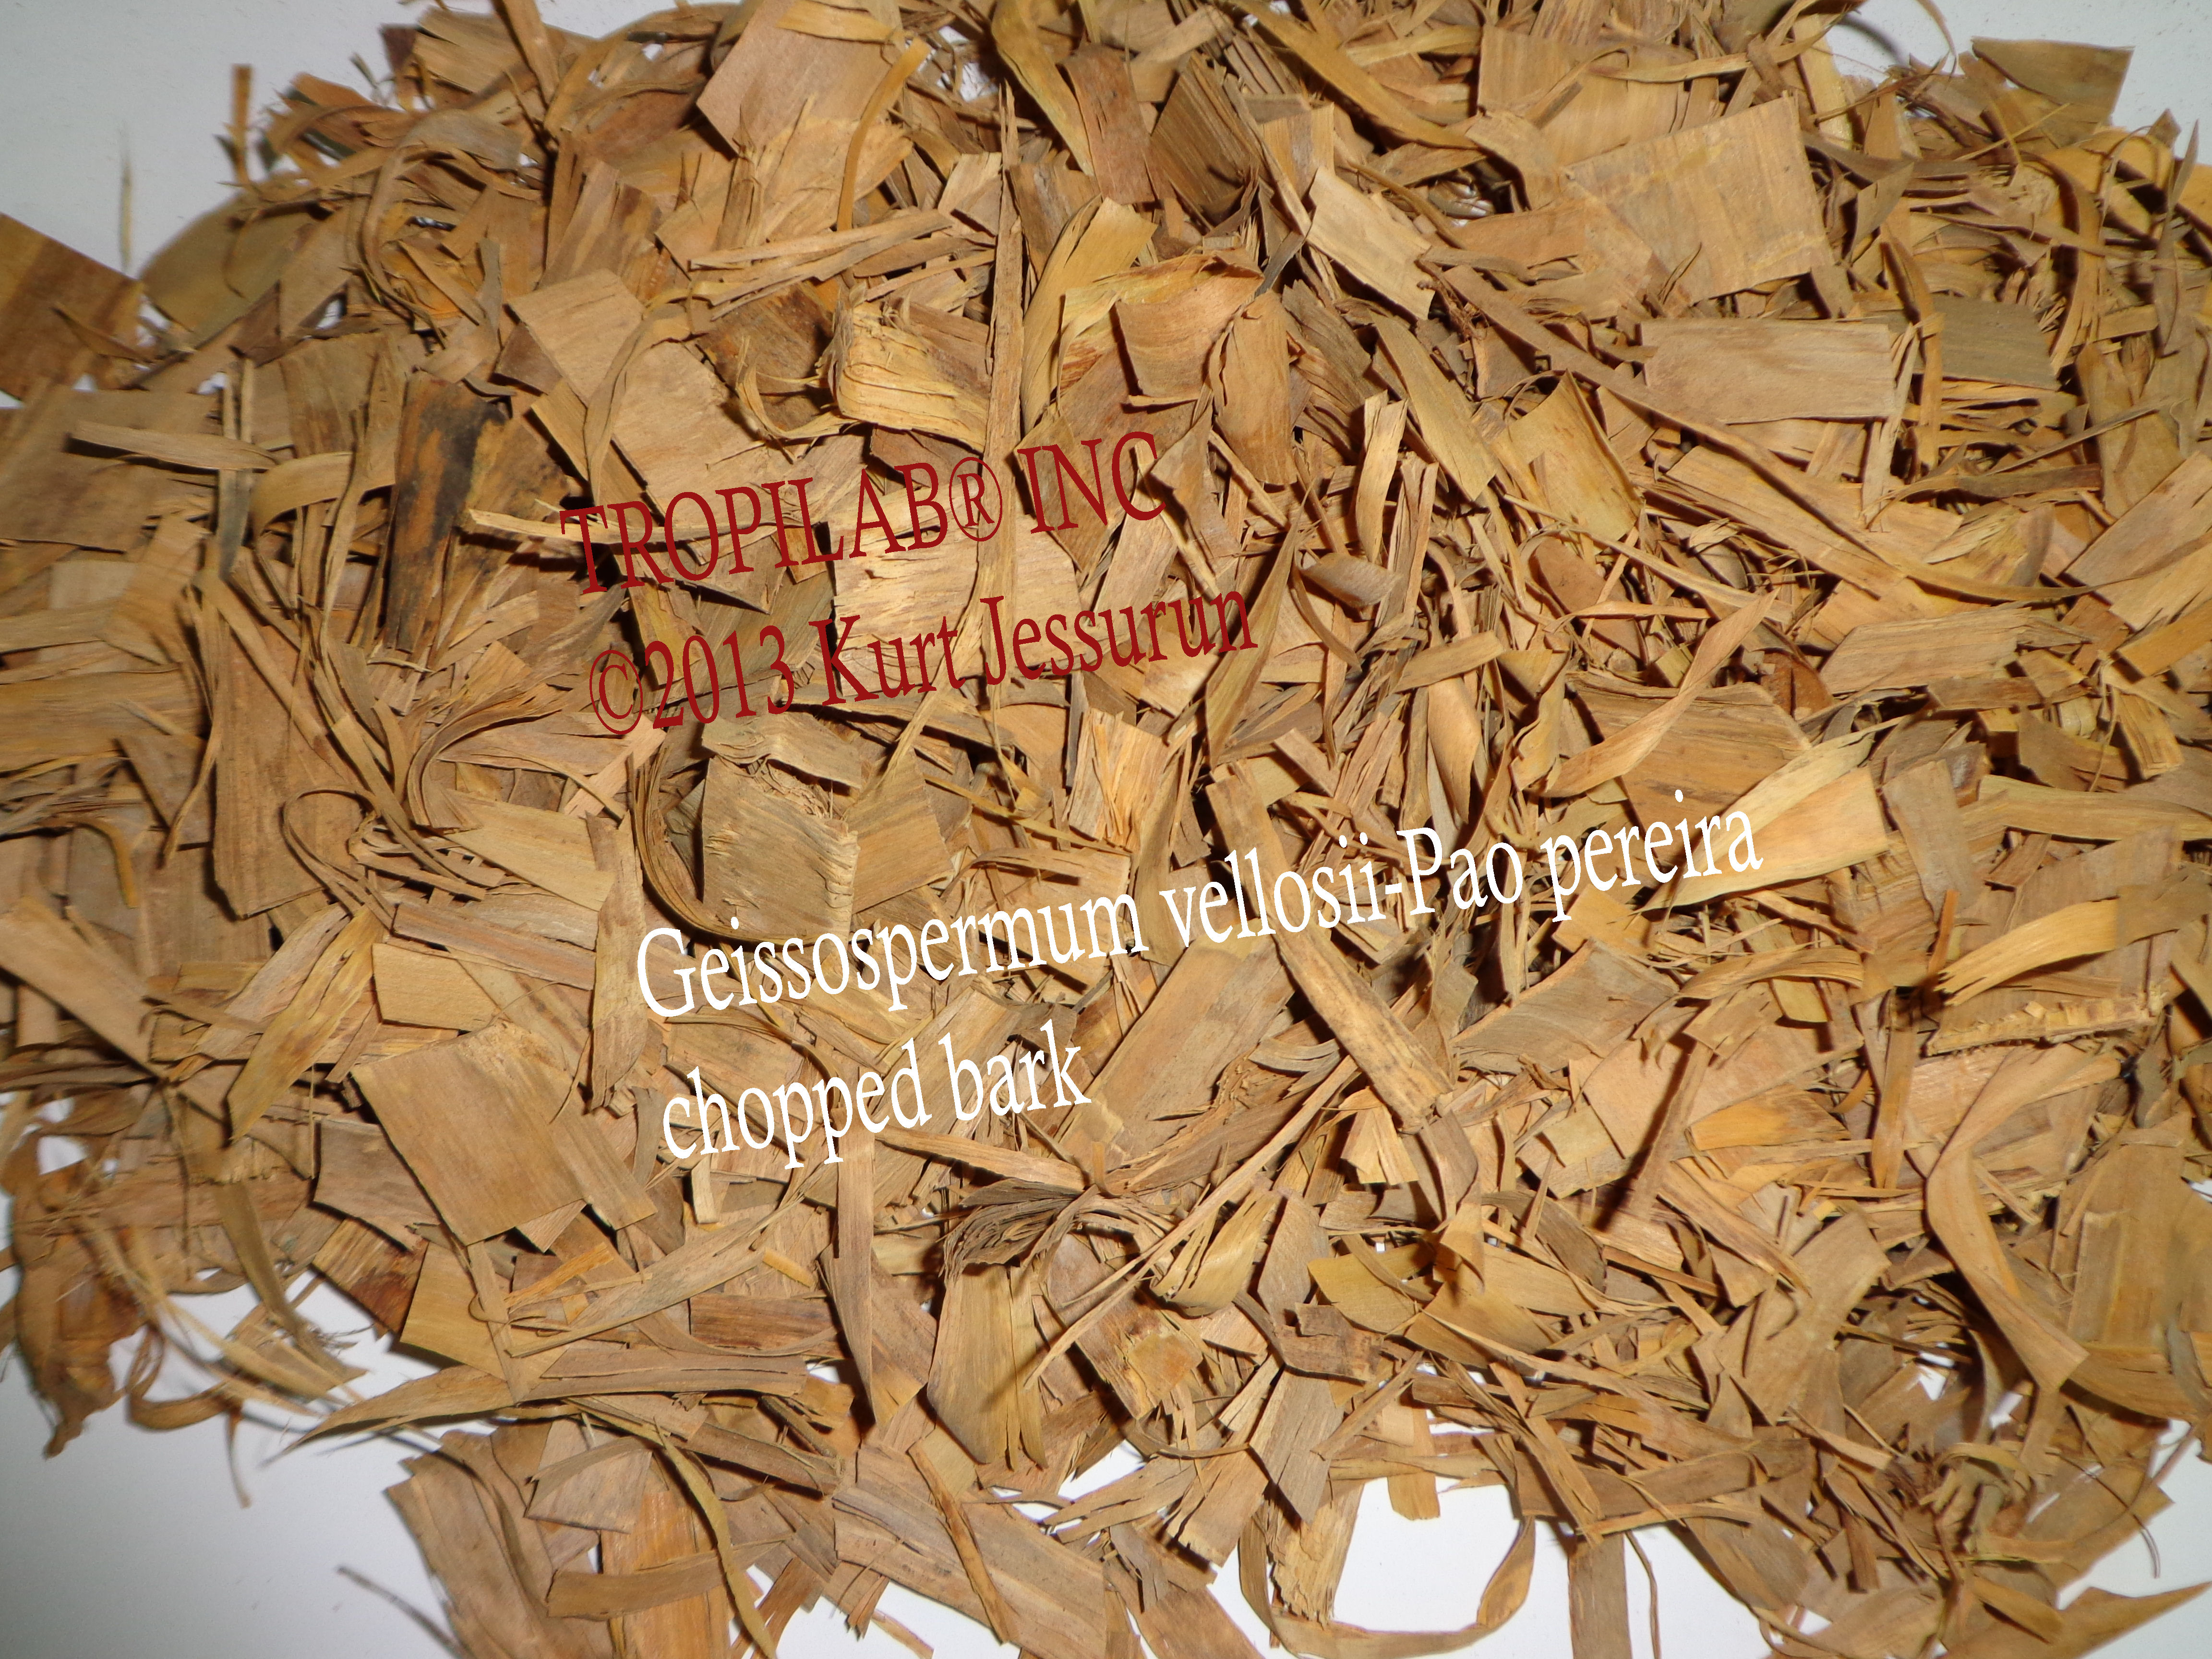 Geissospermum vellosii-Pao pereira chopped bark